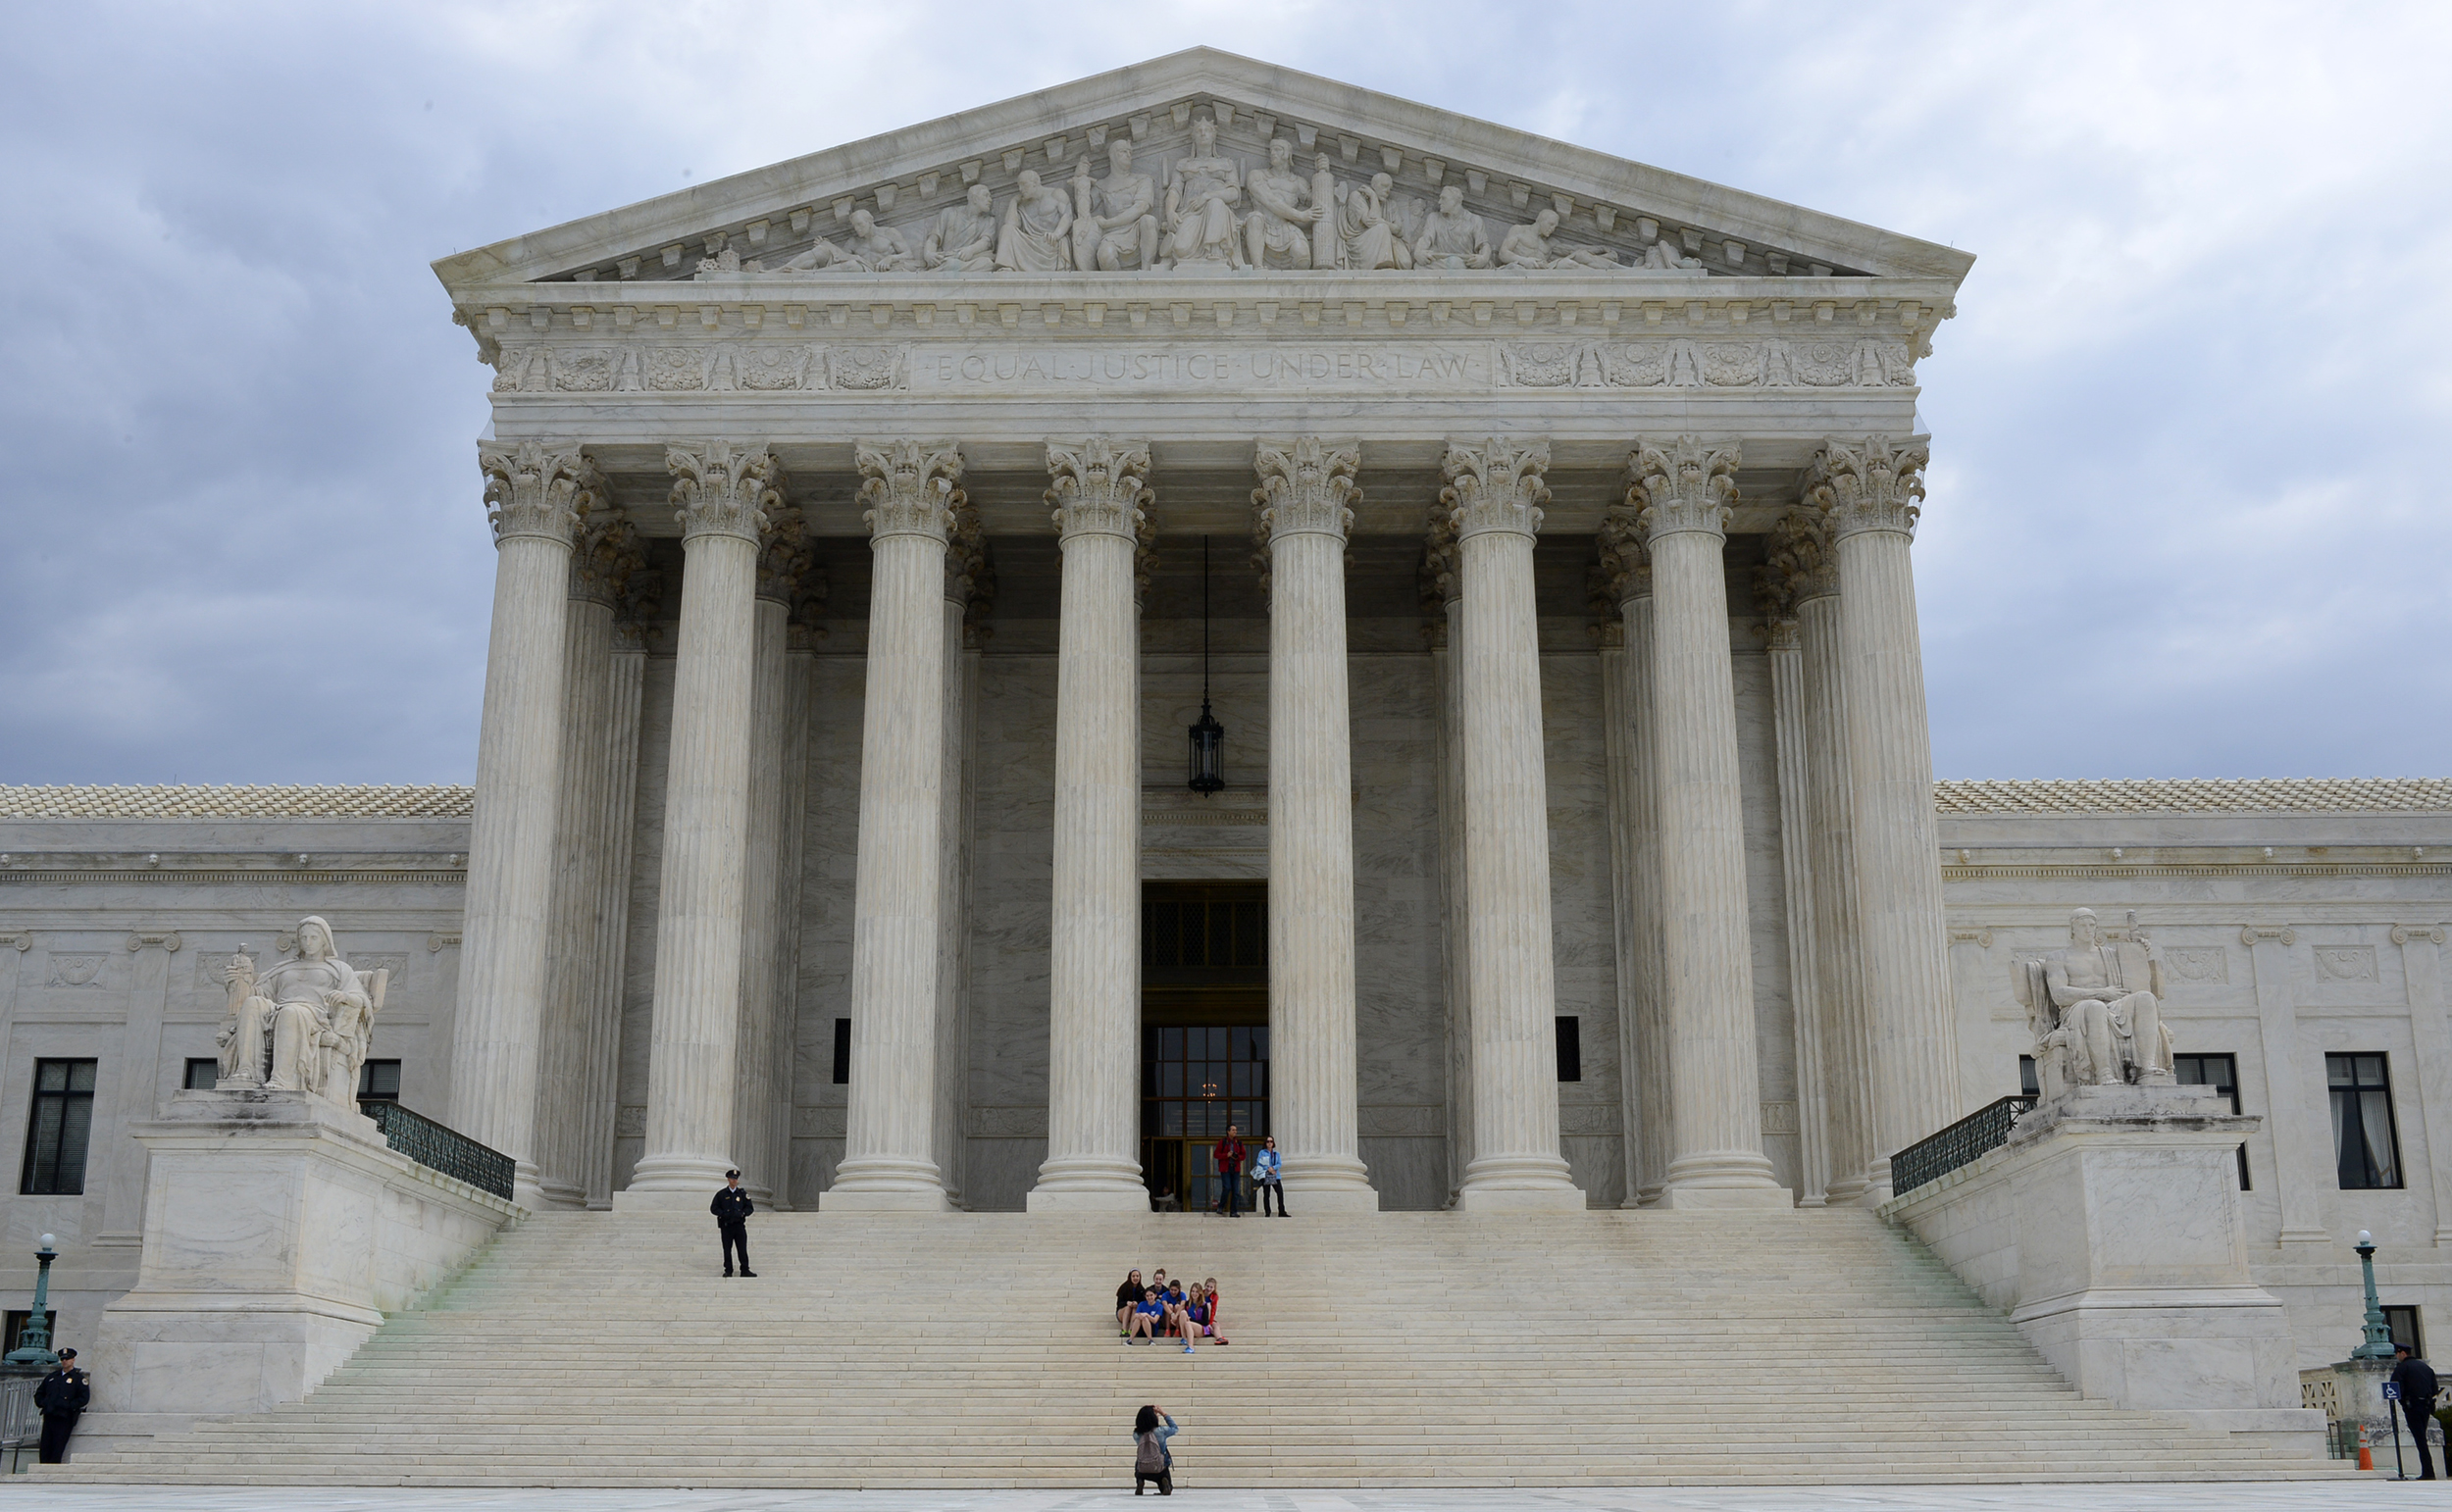 The U.S. Supreme Court in Washington, D.C., April 2, 2014. (Creative Commons photo by Stephen Melkisethian)